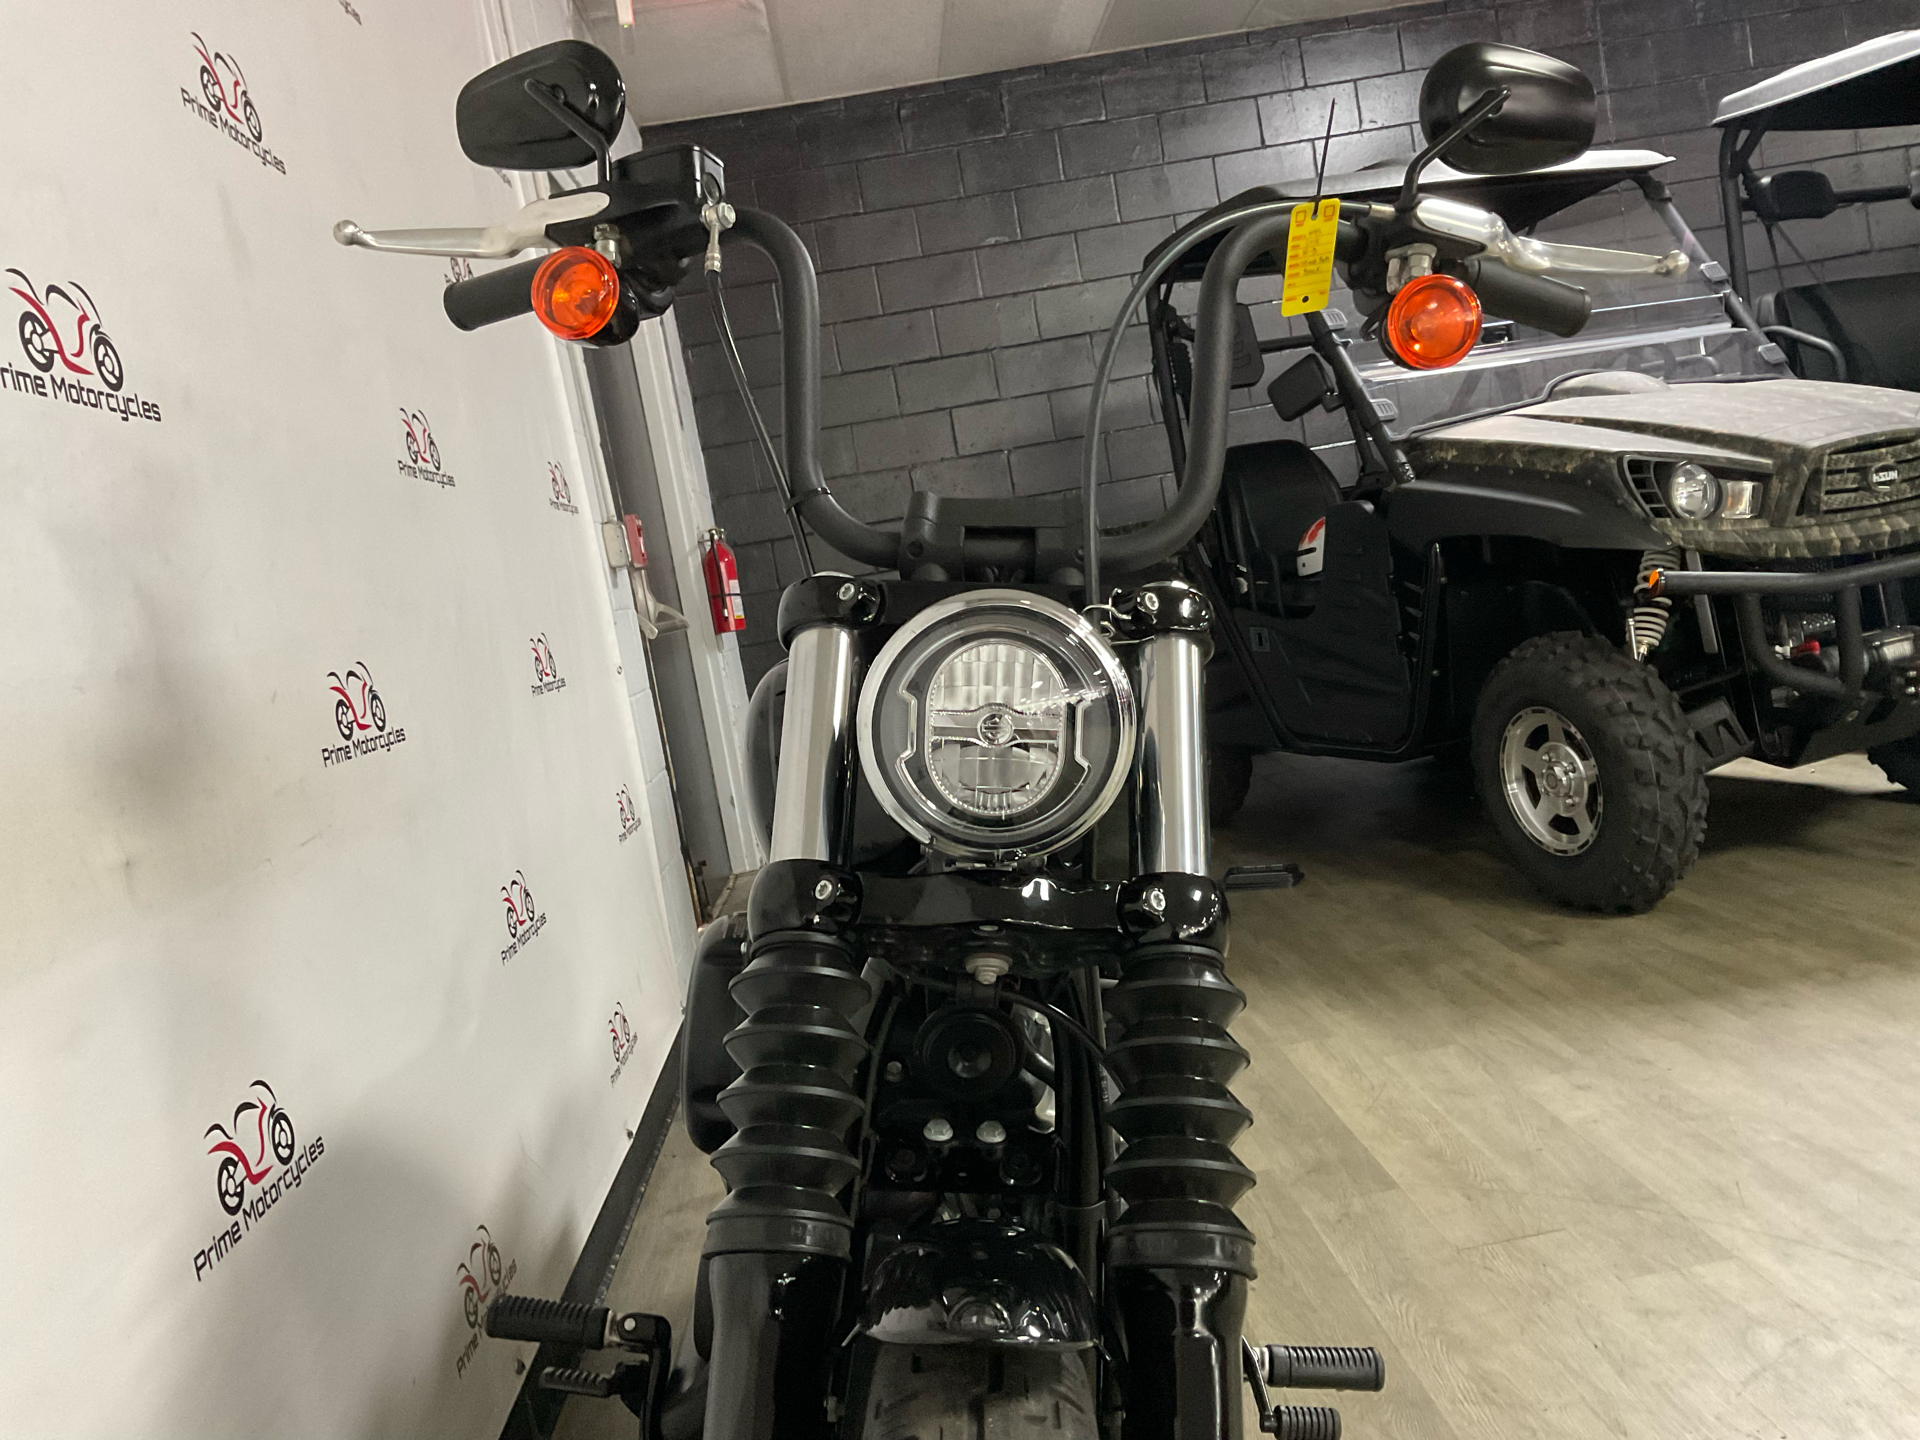 2018 Harley-Davidson Street Bob® 107 in Sanford, Florida - Photo 12